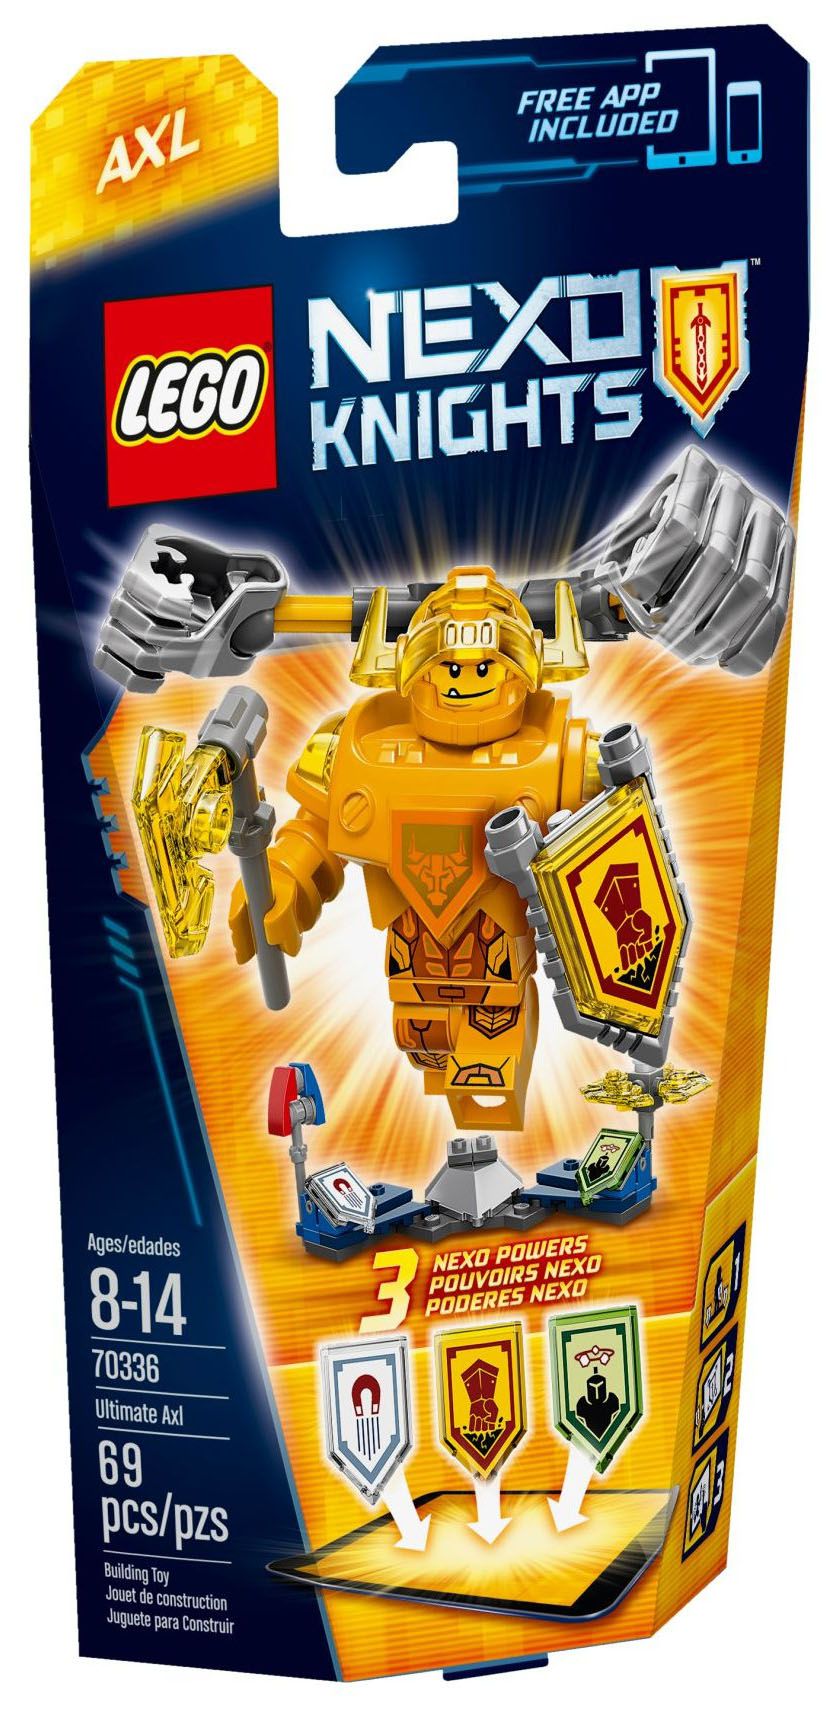 LEGO Nexo Knights 70336 pas cher, Axl l'Ultime chevalier